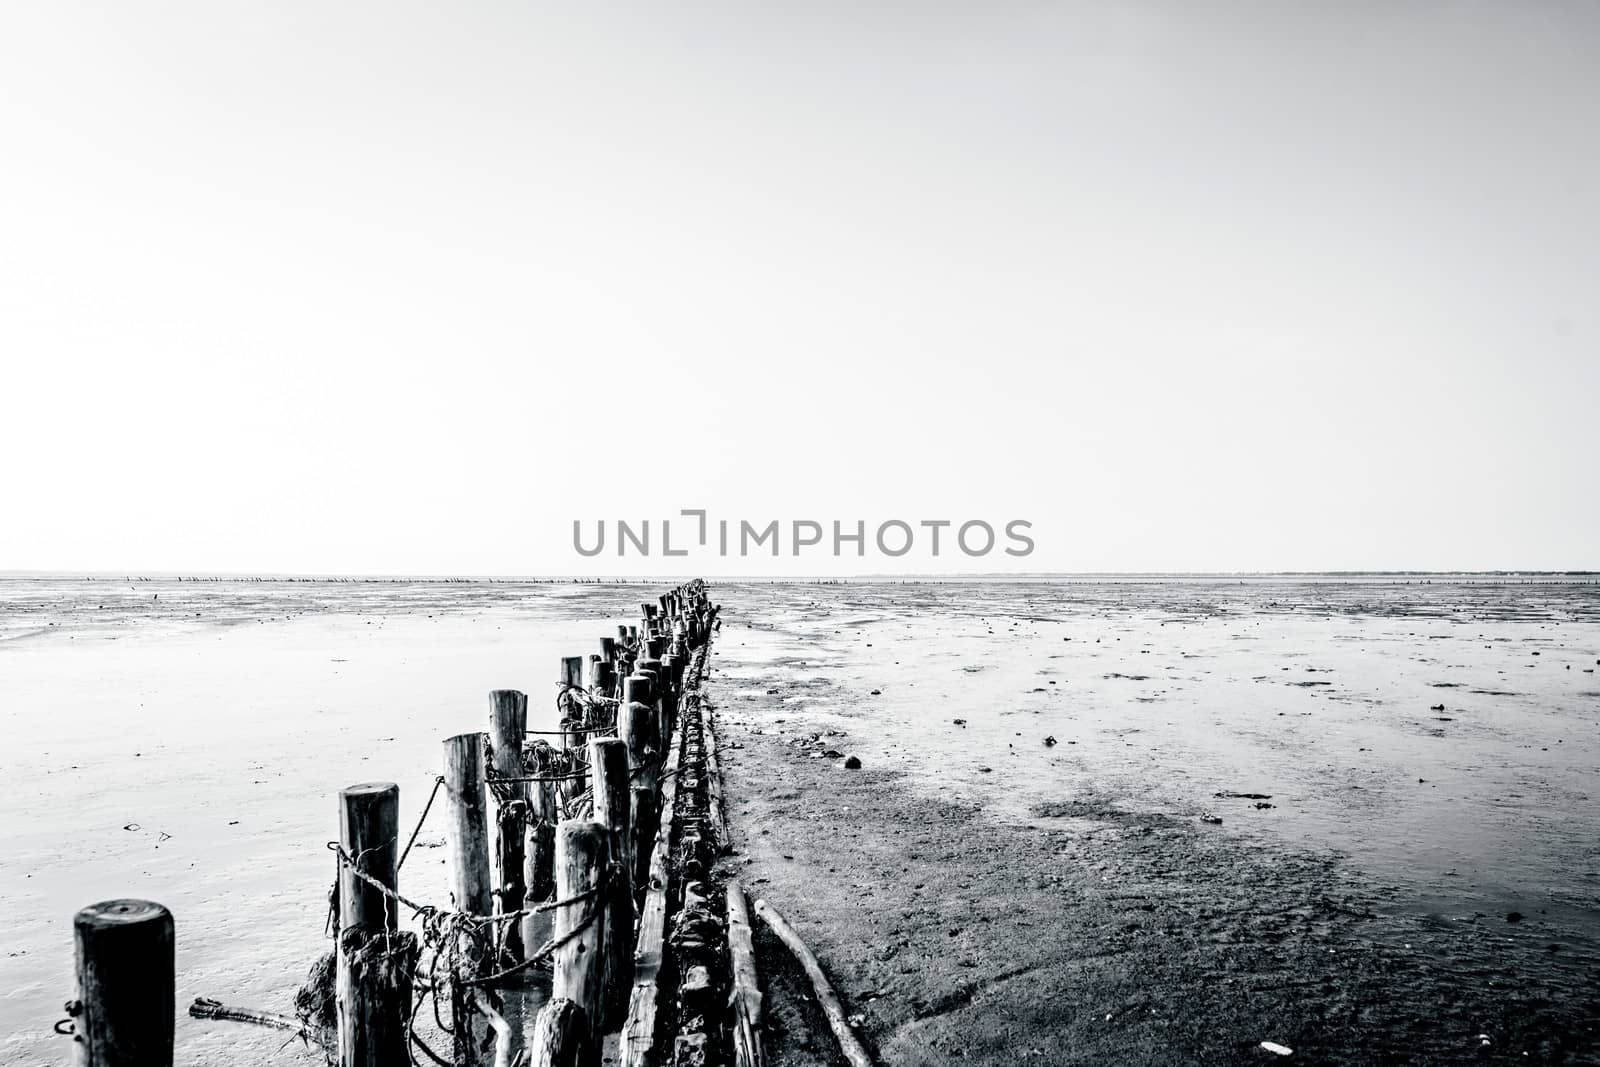 Wooden poles on a low tide beach